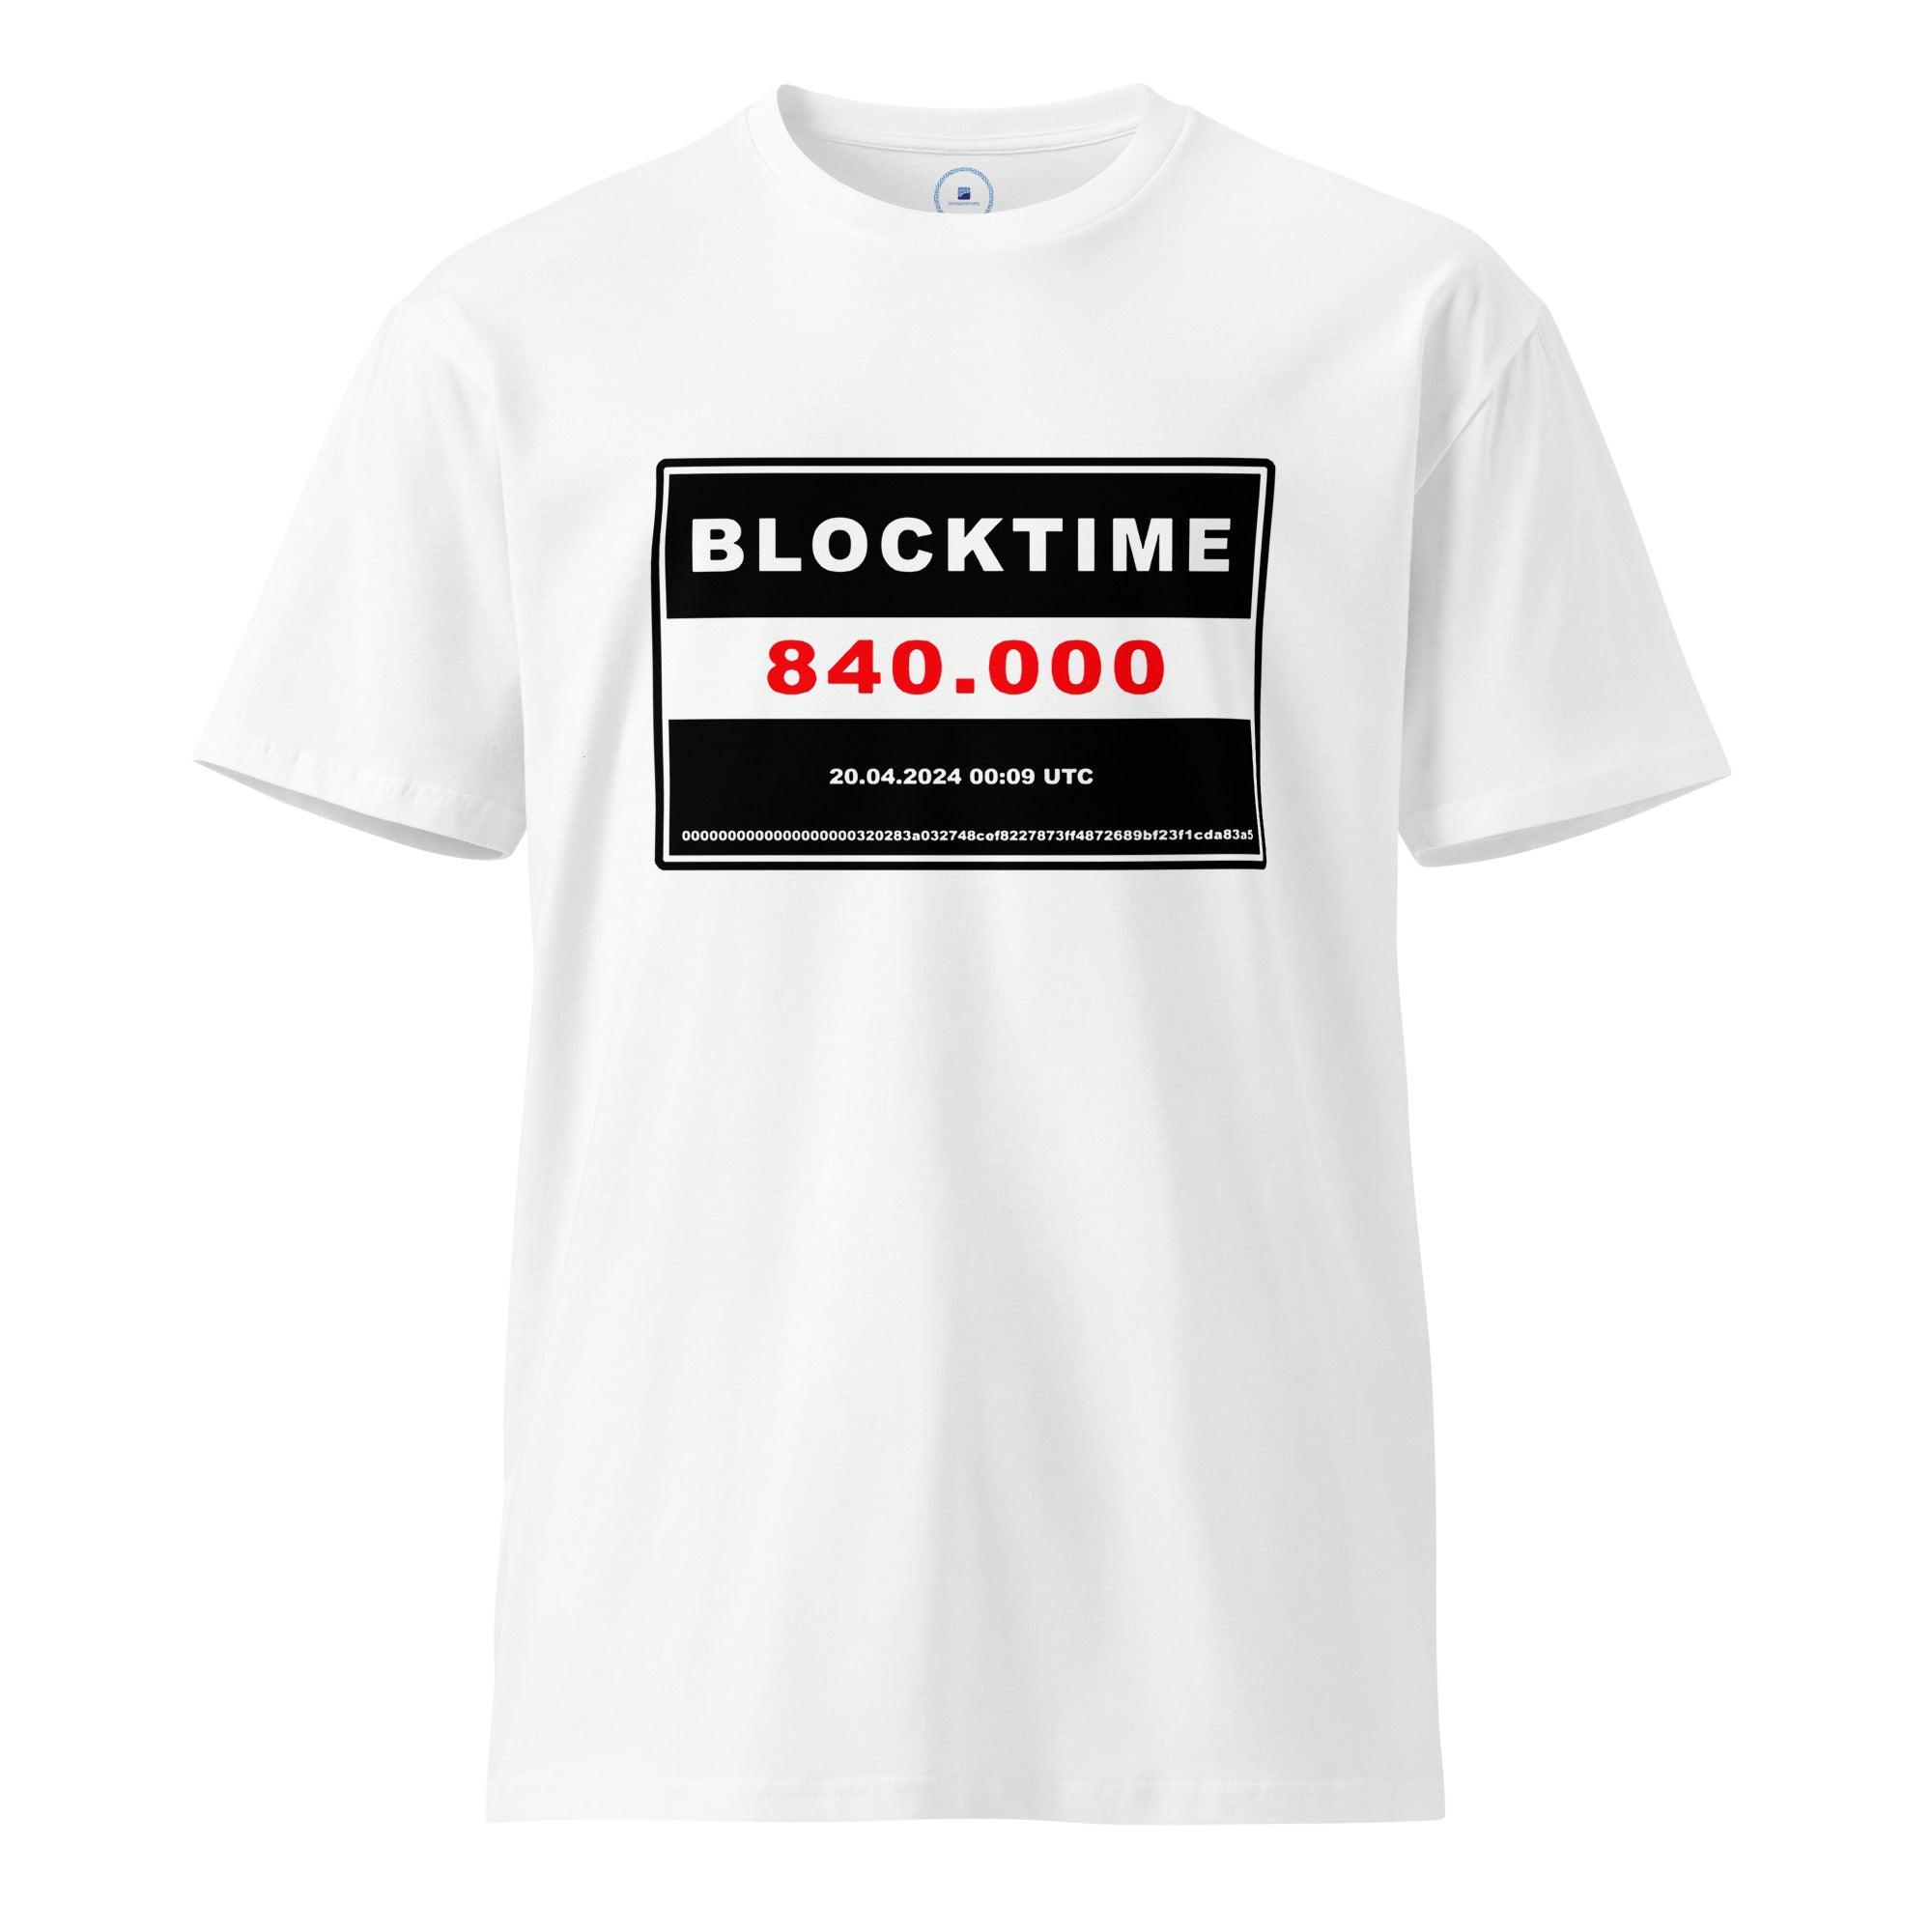 Blocktime T-Shirt - InvestmenTees